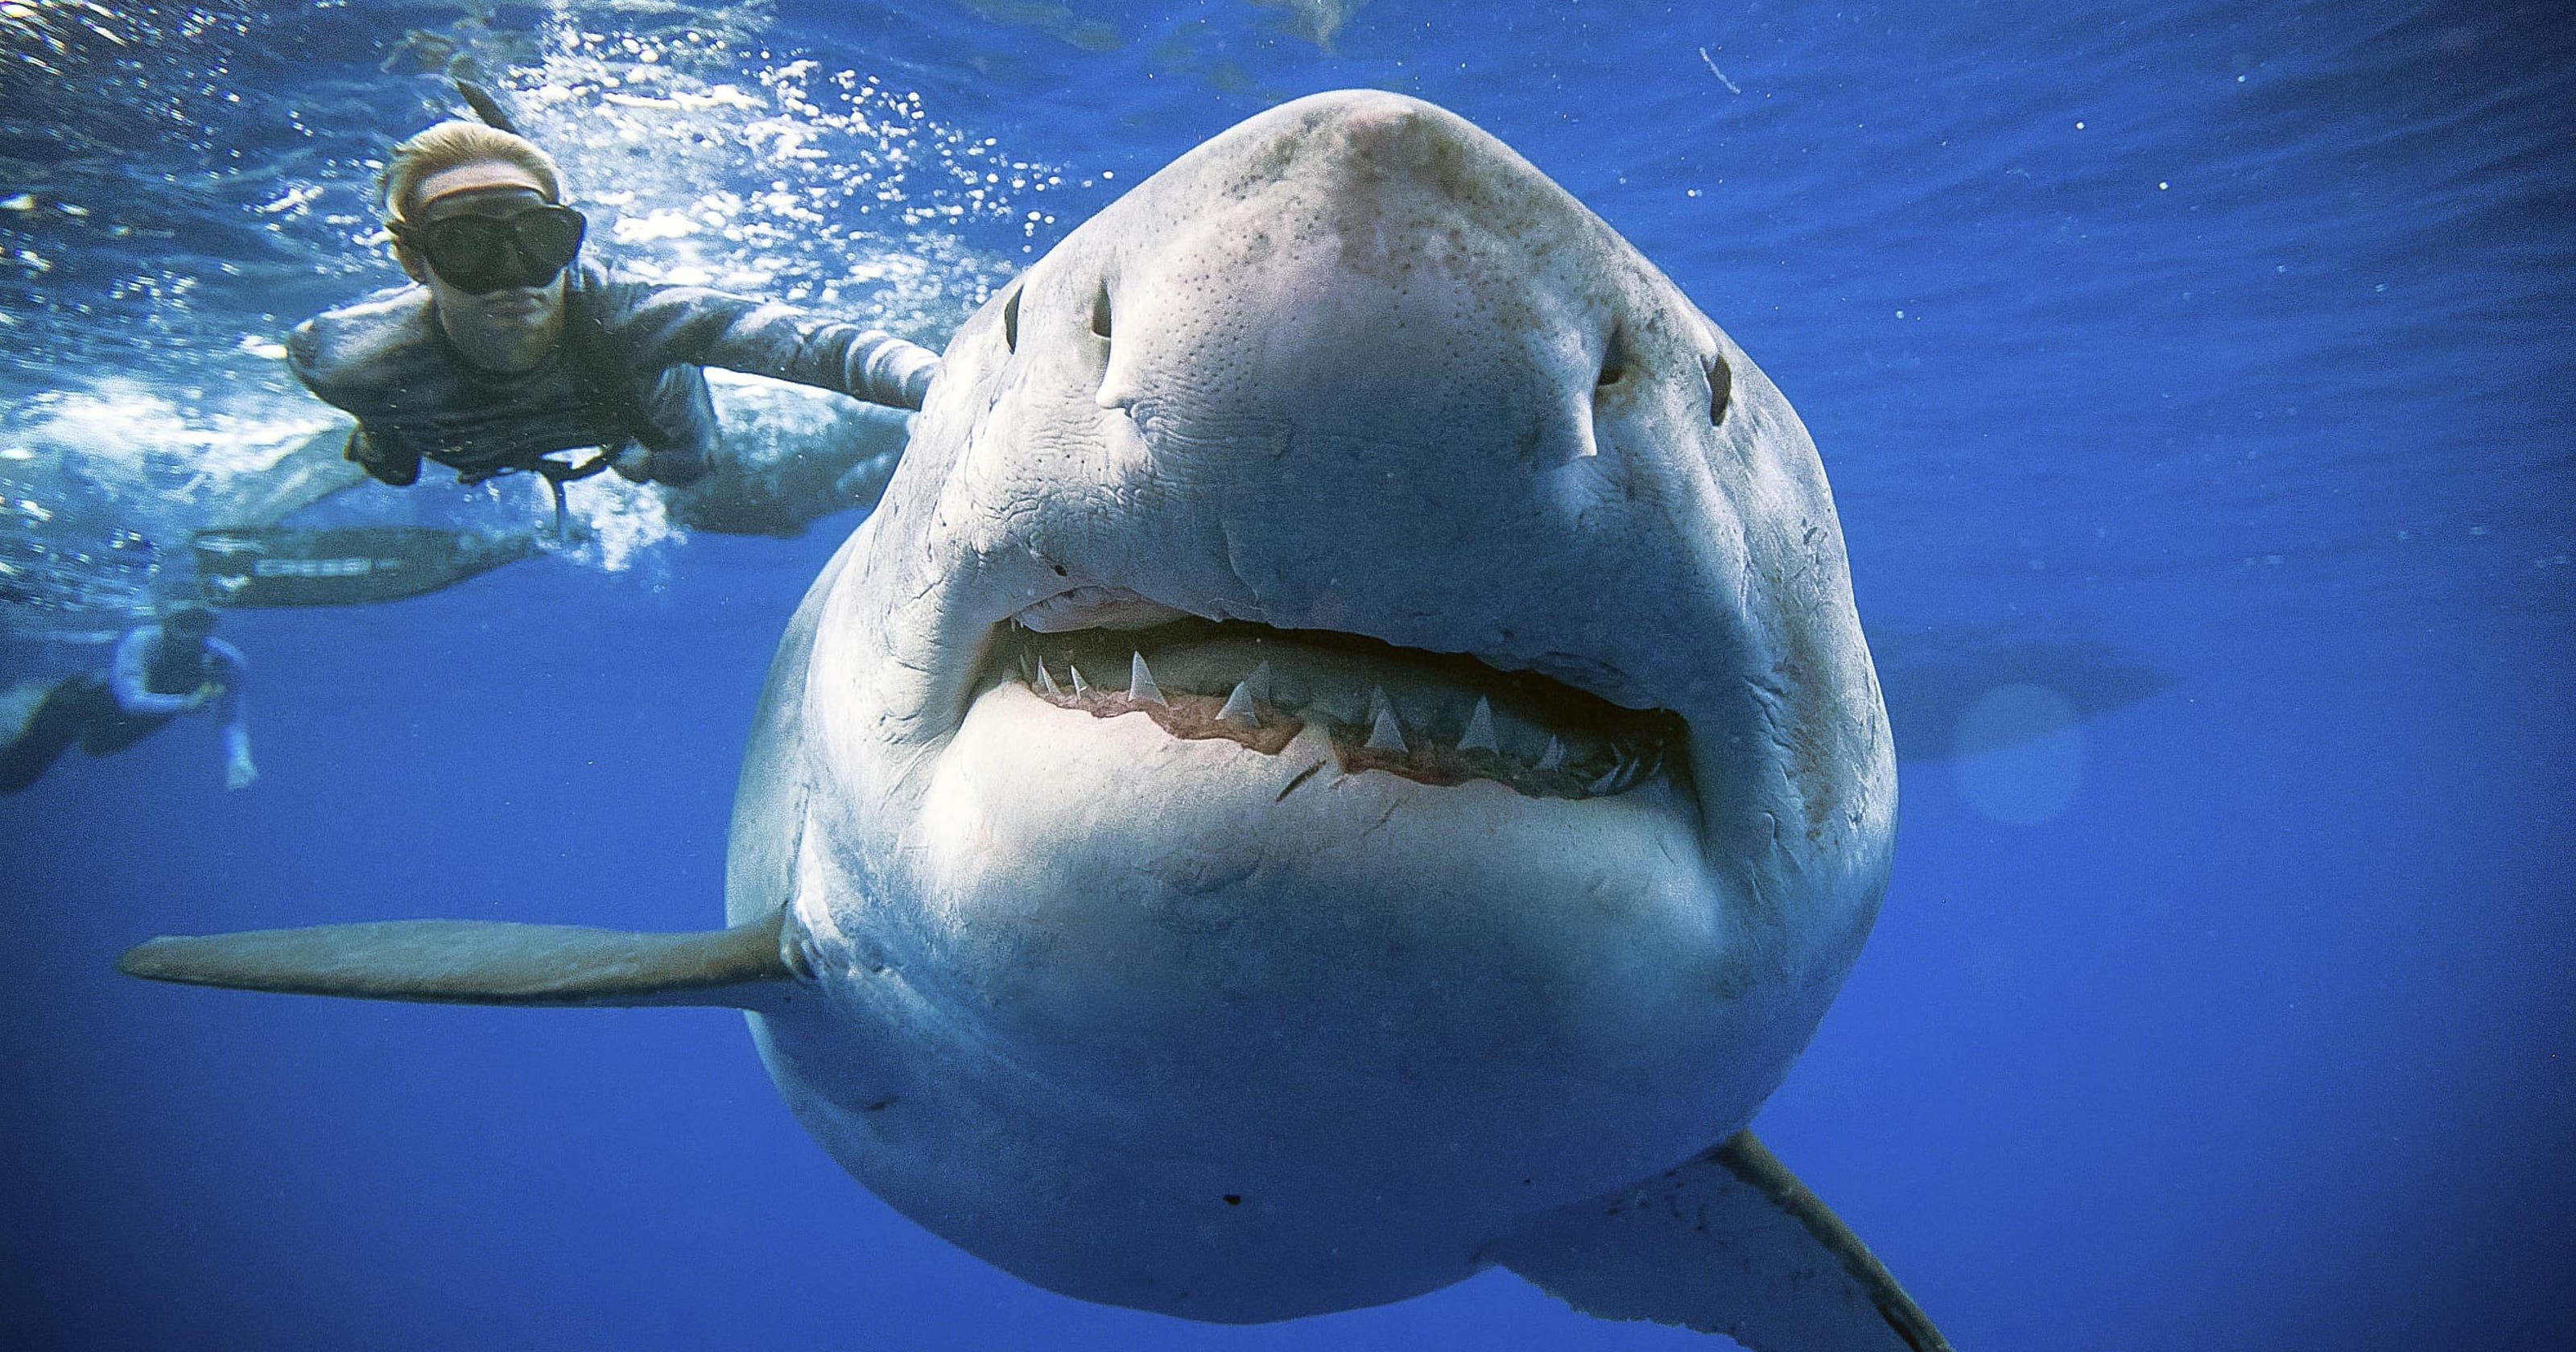 Researchers encounter huge great white shark